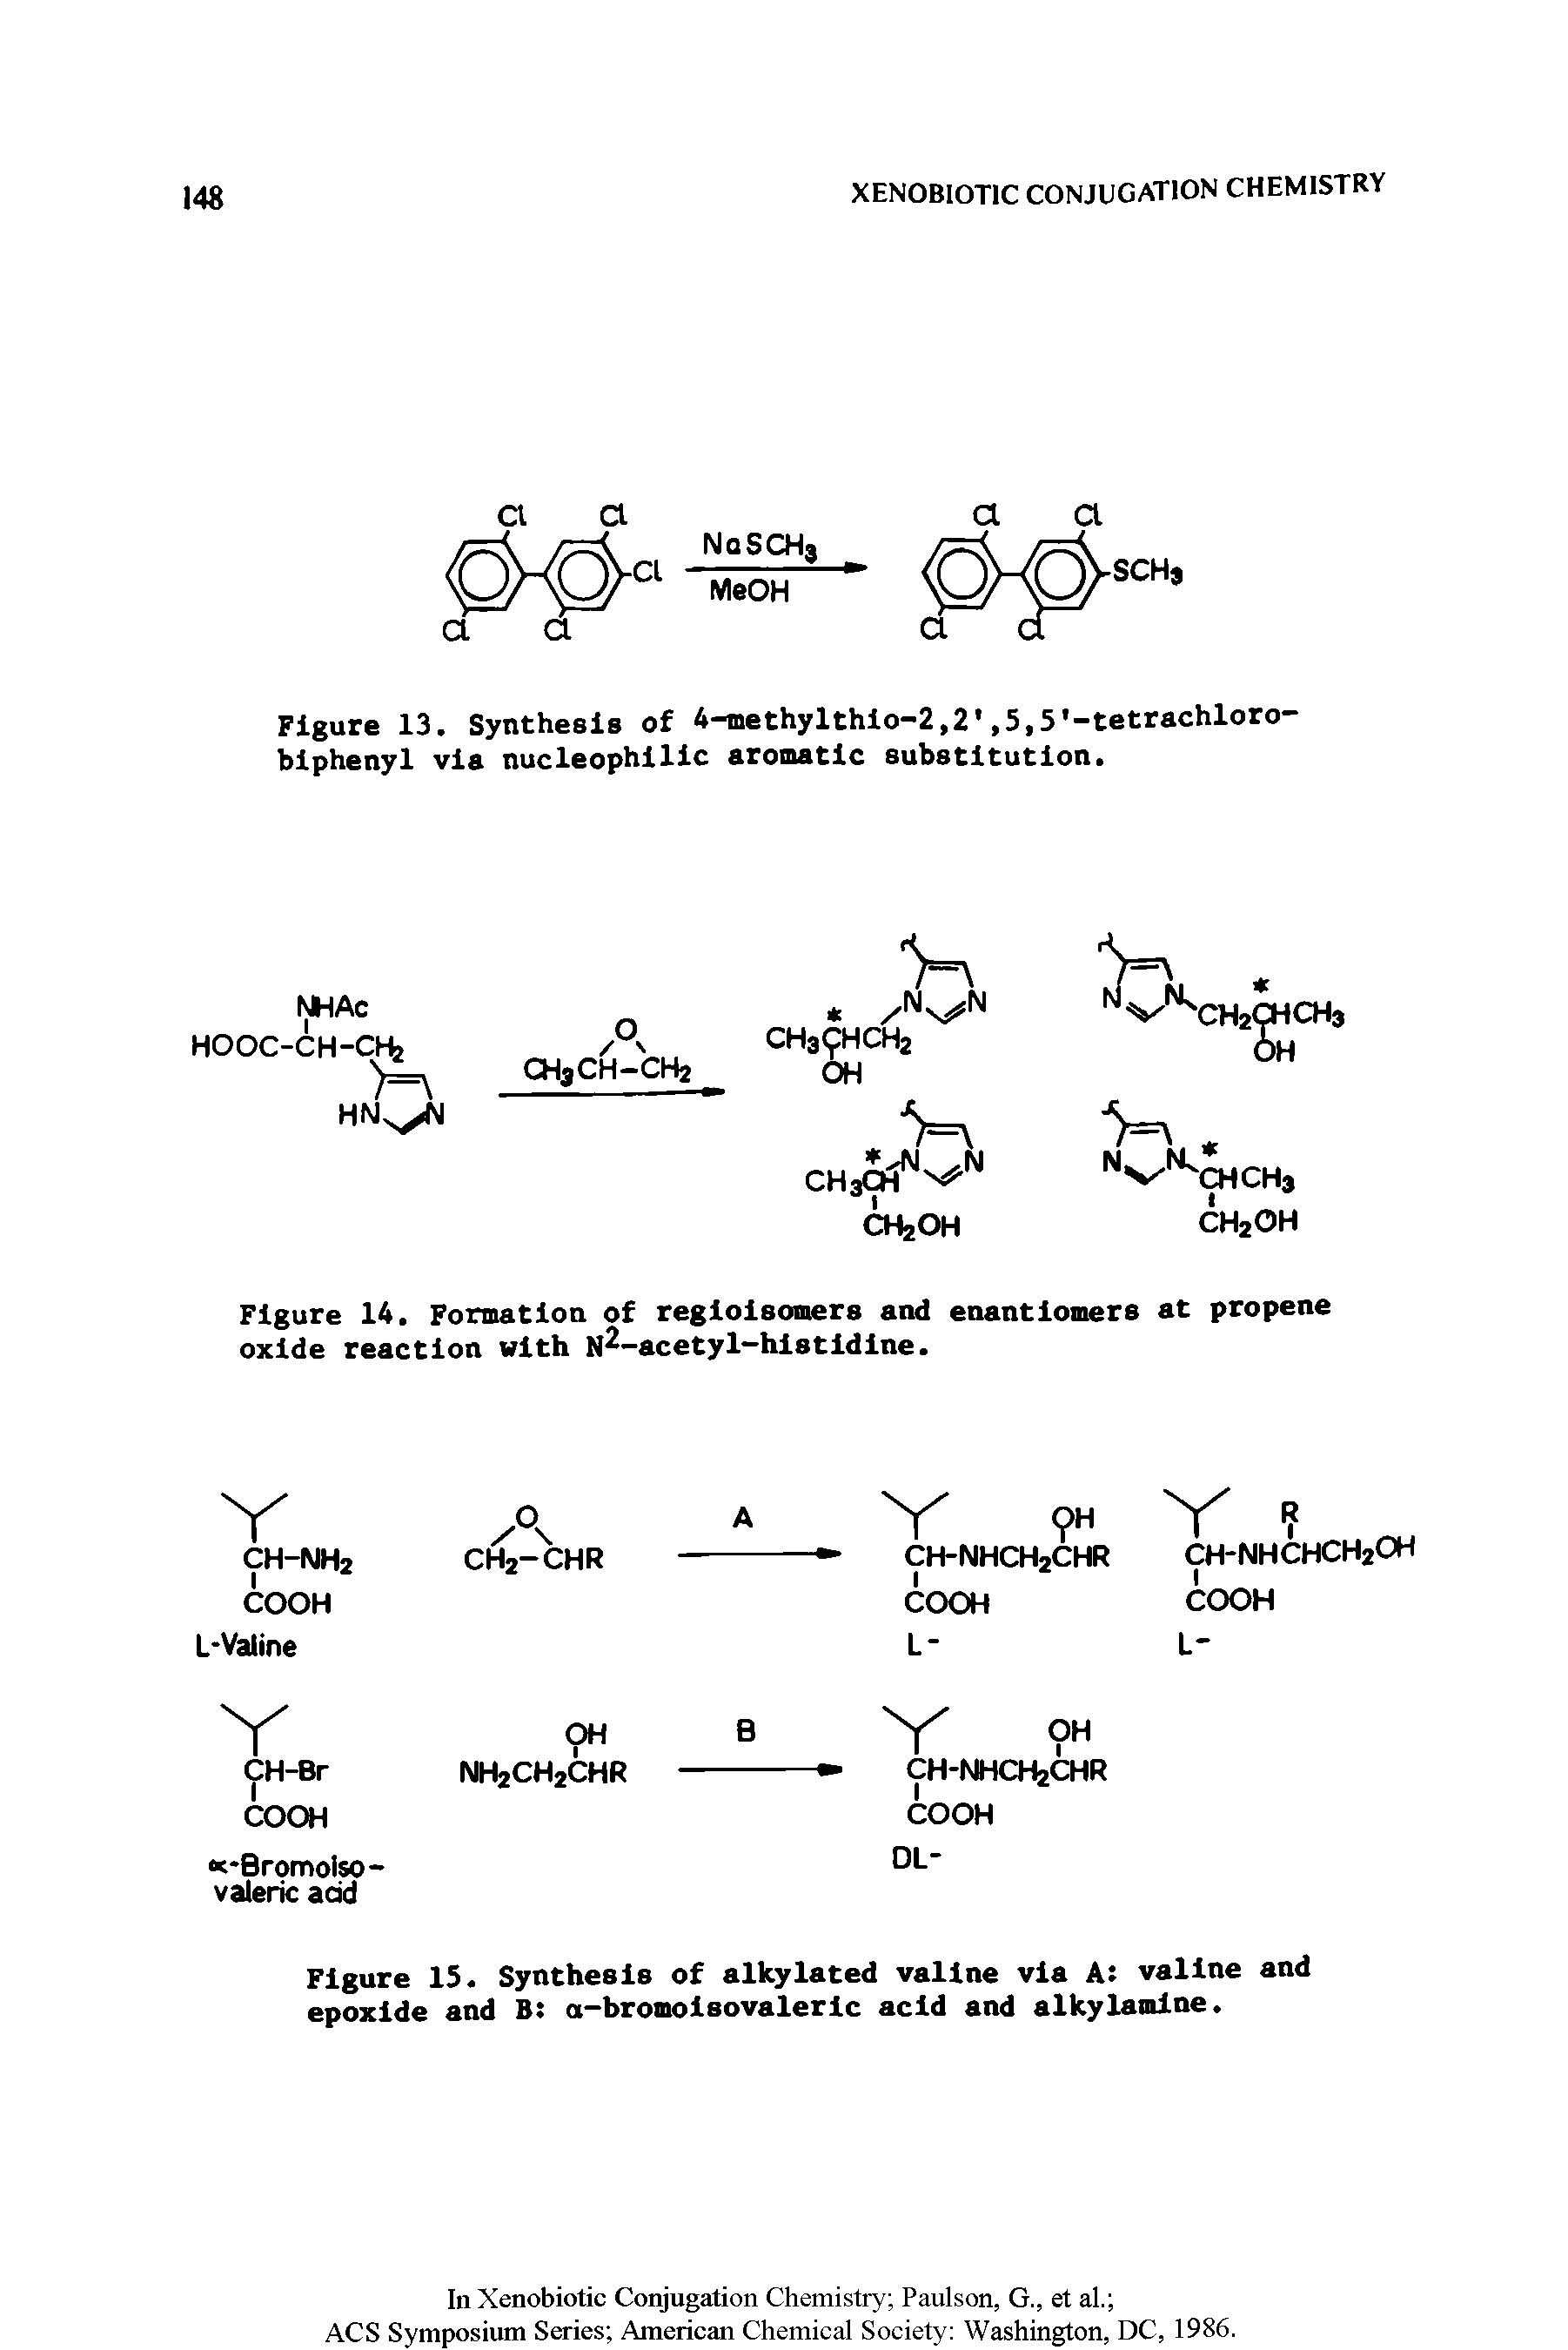 Figure 13. Synthesis of 4-methylthio-2,2, 5,5 -tetrachloro-biphenyl via nucleophilic aromatic substitution.